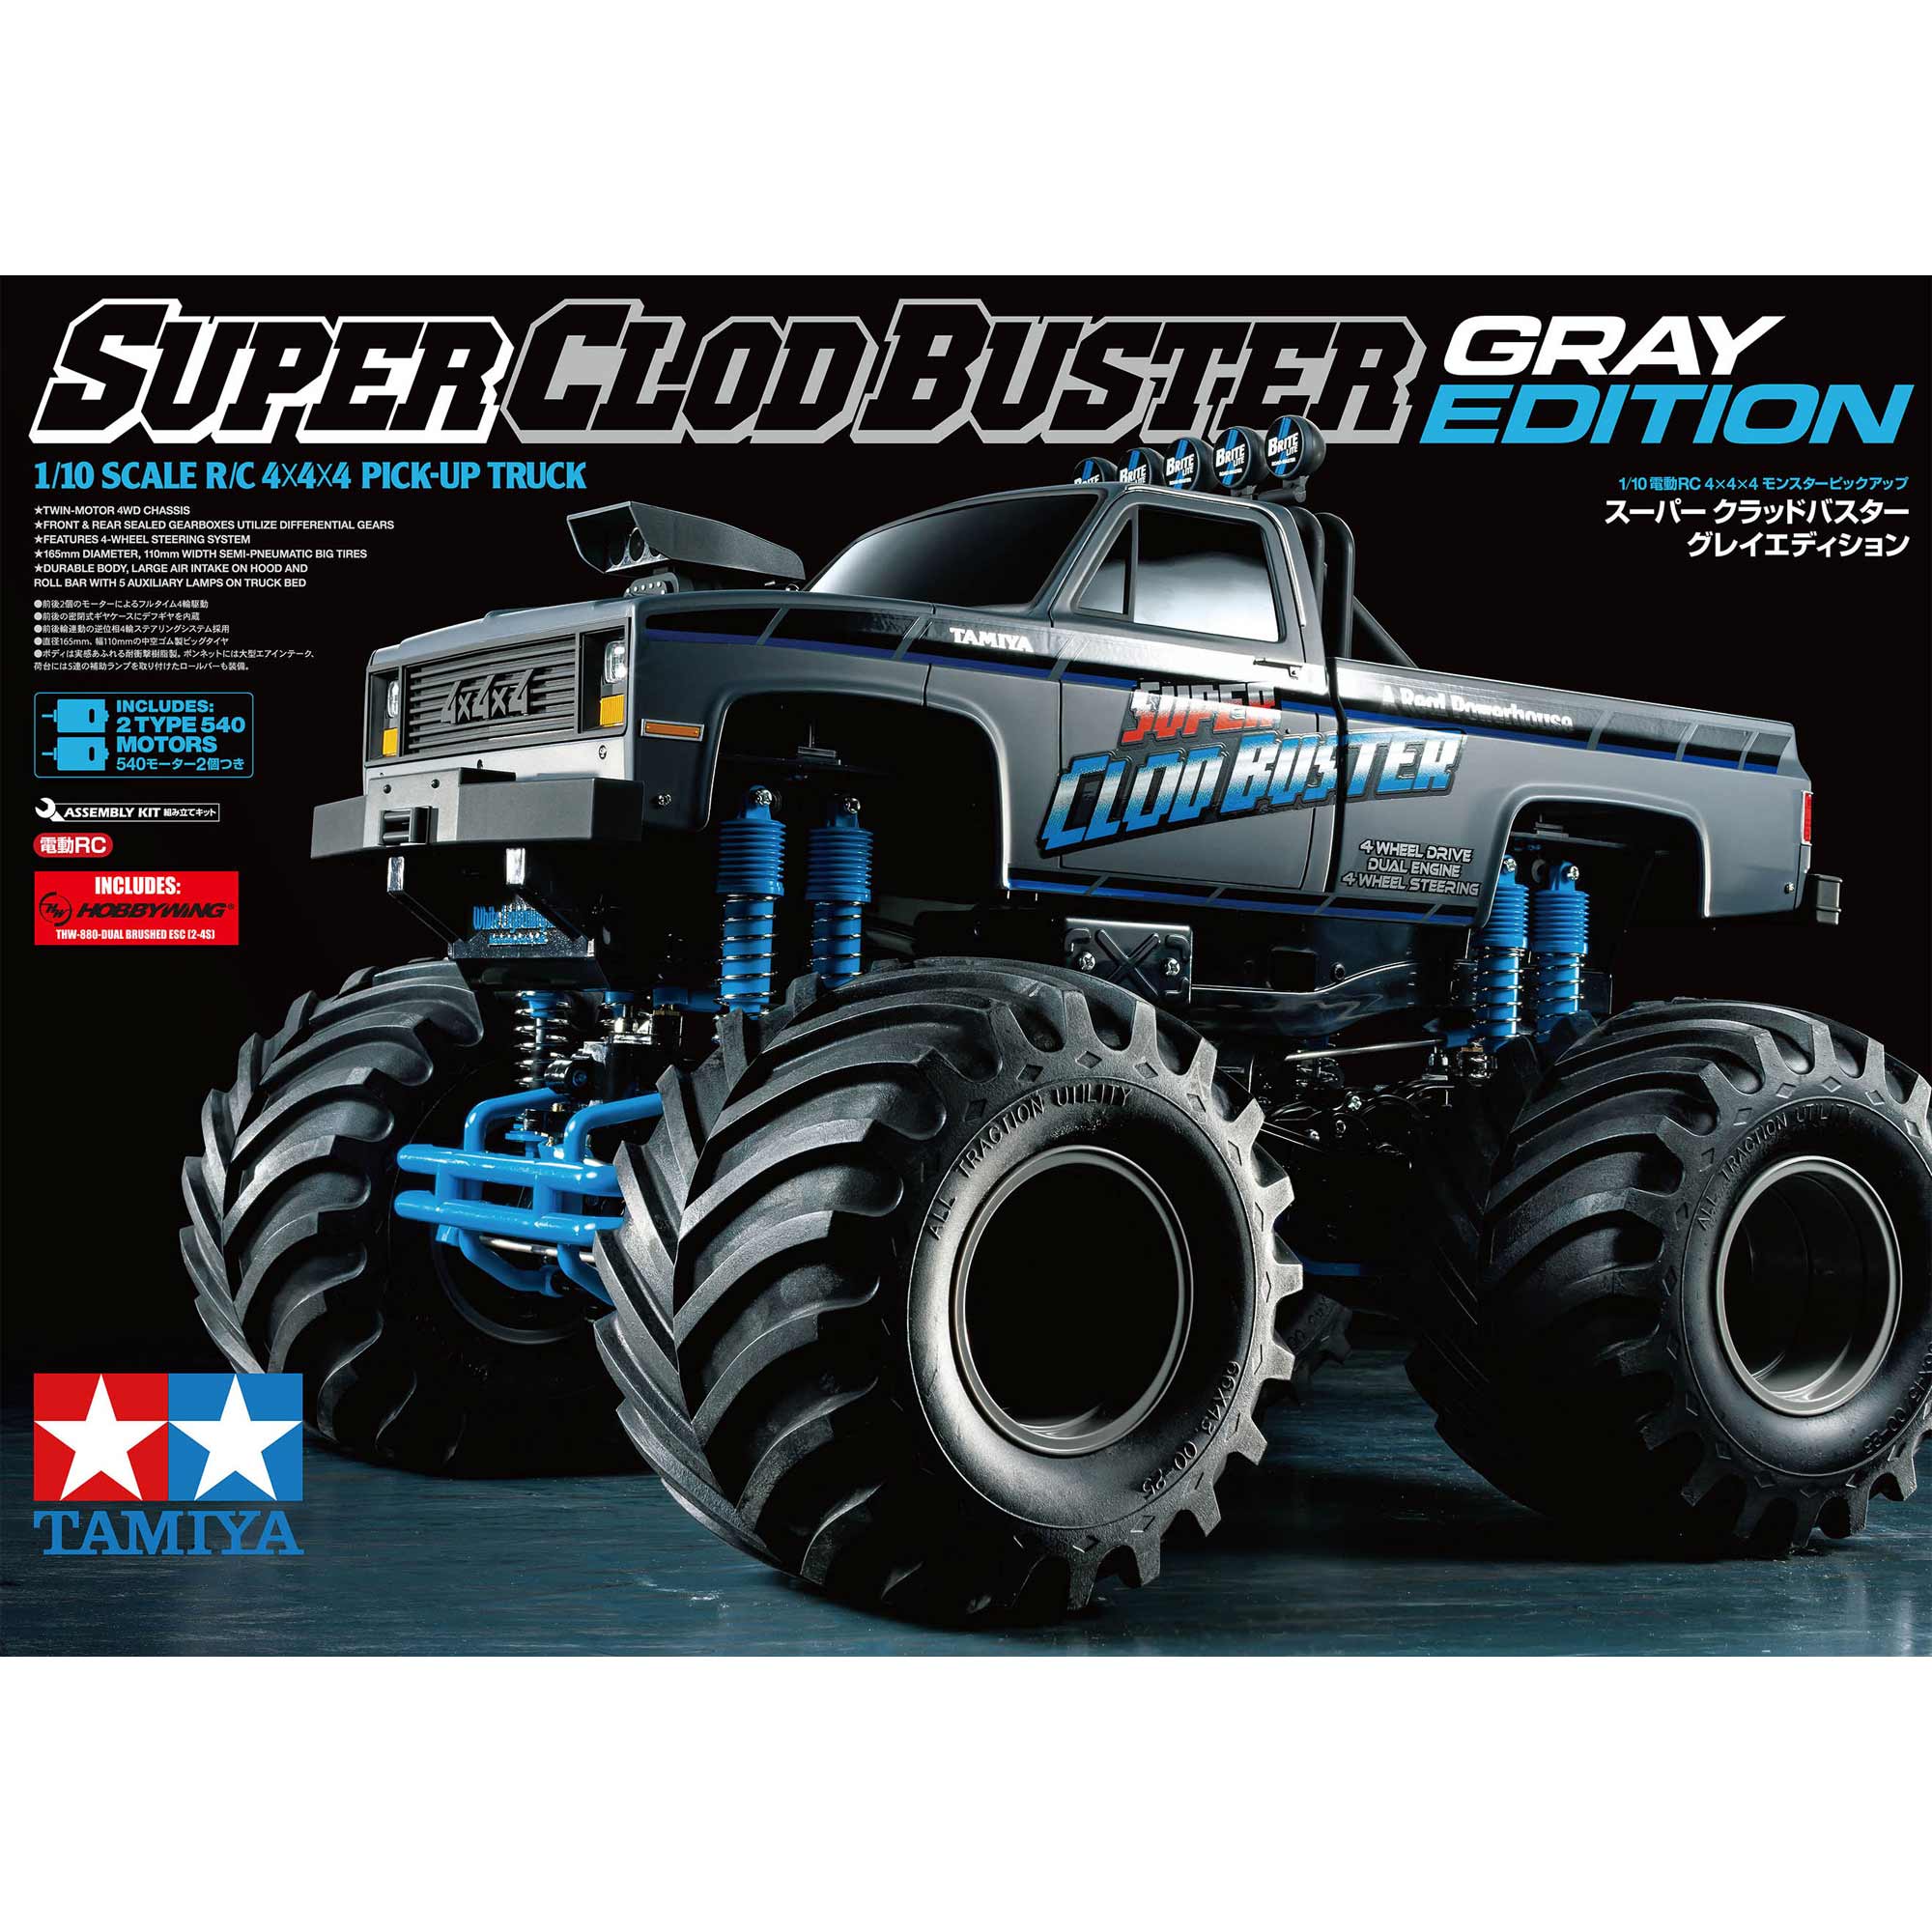 Tamiya 1/10 Super Clod Buster 4X4 Monster Truck Kit, Grey (Limited